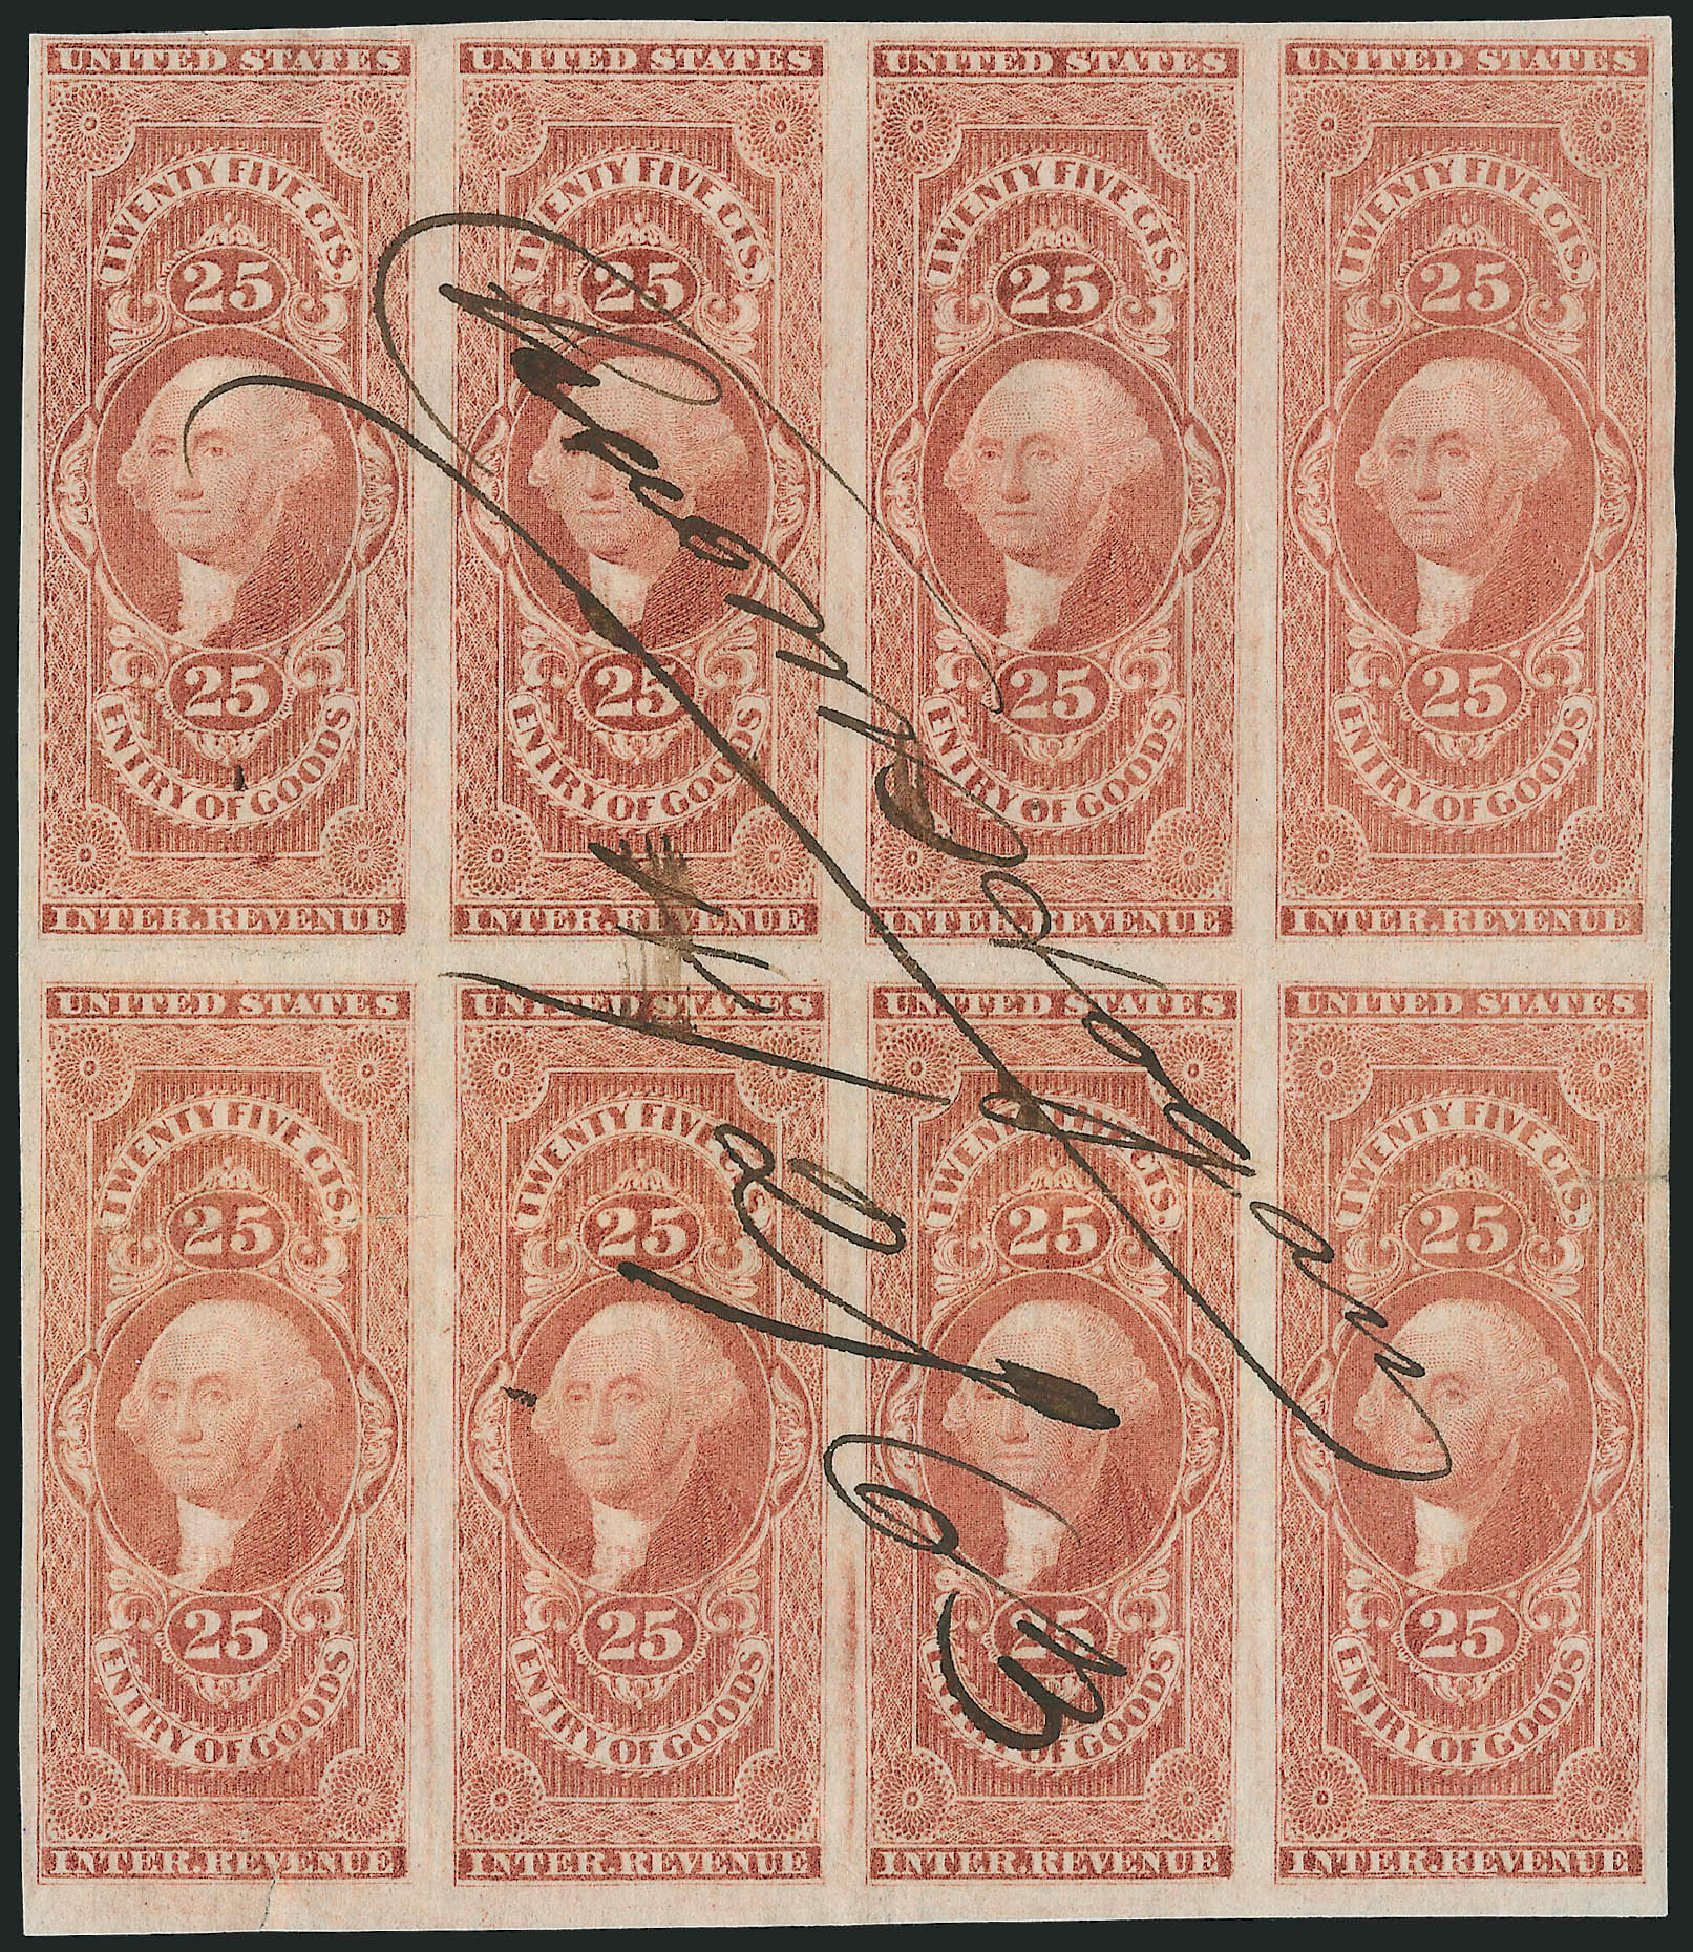 US Stamp Values Scott Catalog R45 - 1862 25c Revenue Entry of Goods. Robert Siegel Auction Galleries, Dec 2014, Sale 1089, Lot 337